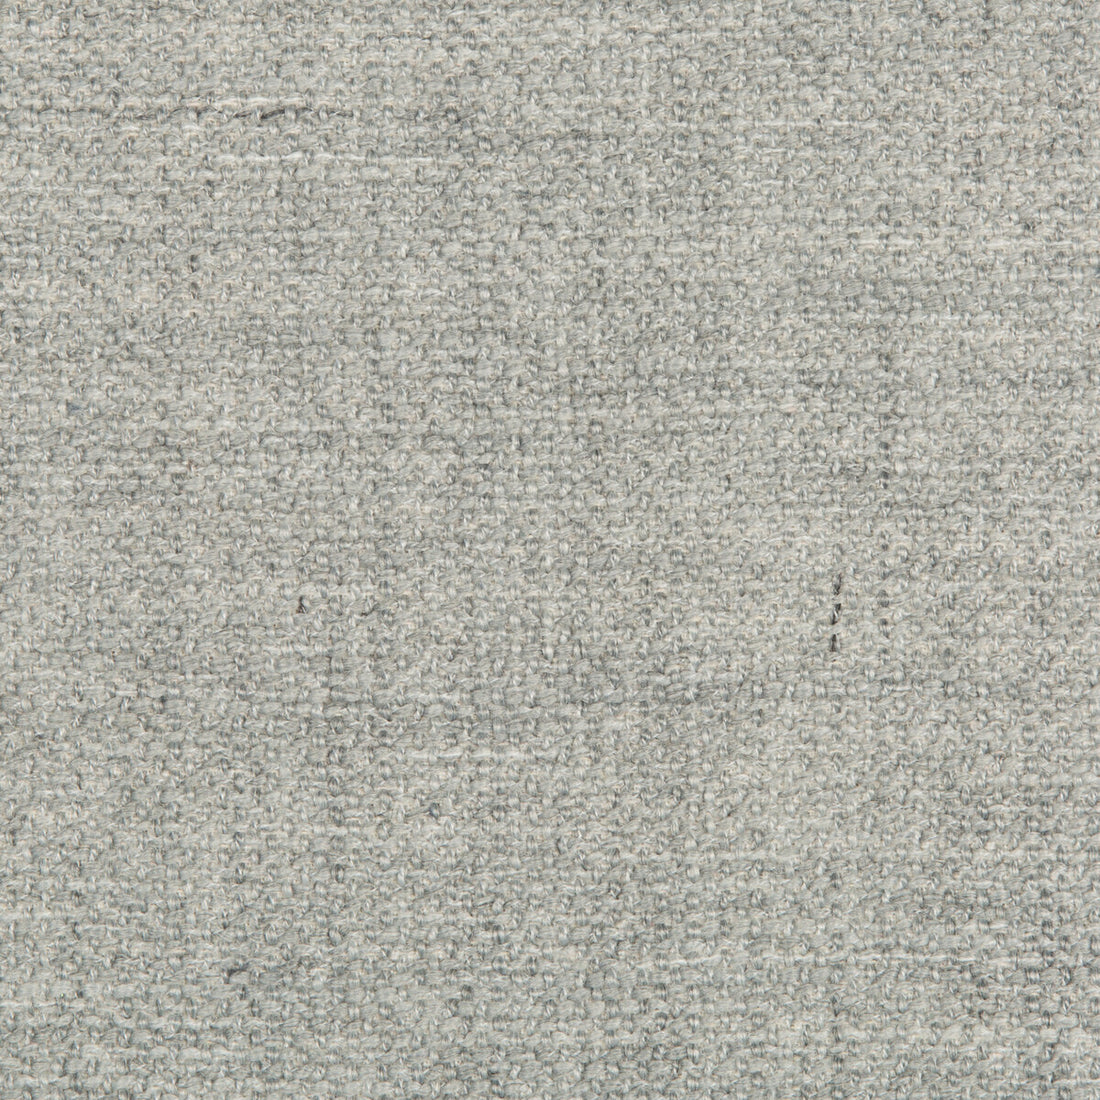 Kravet Smart fabric in 35379-1121 color - pattern 35379.1121.0 - by Kravet Smart in the Performance Kravetarmor collection